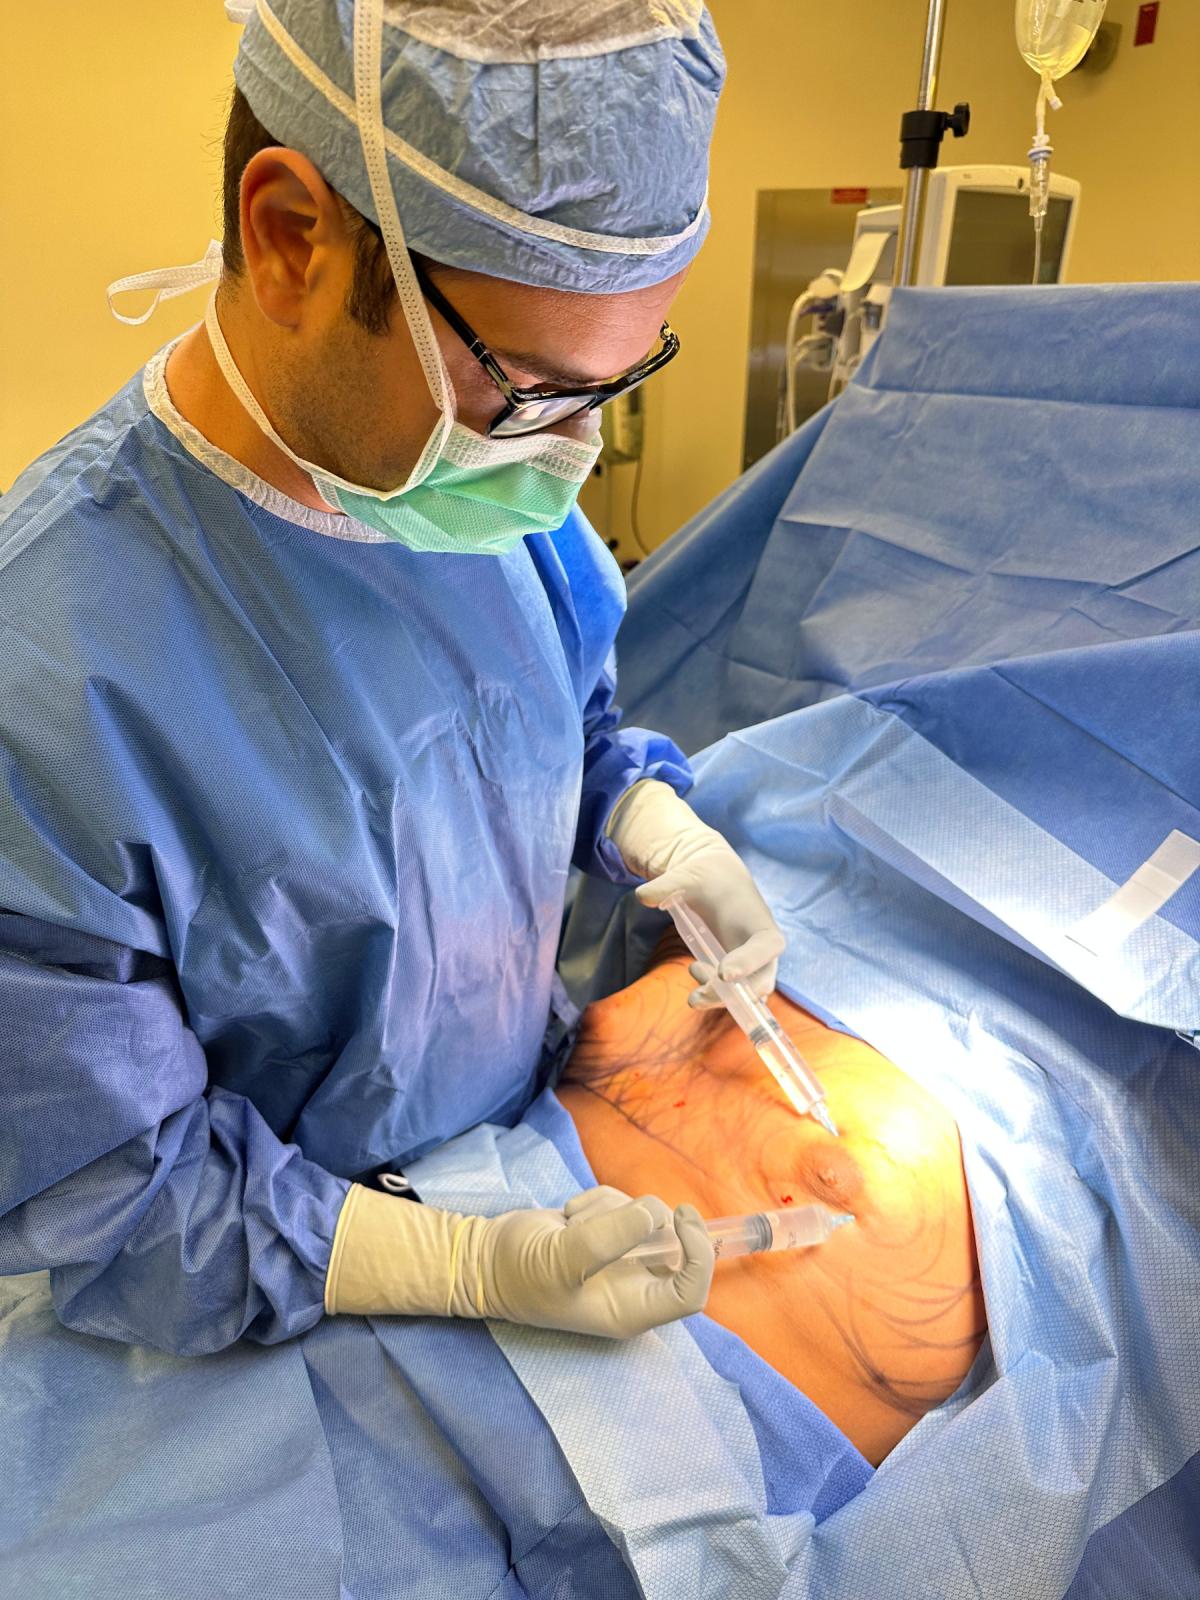 Dr. Solomon Azouz gynecomastia surgery in Dallas, TX